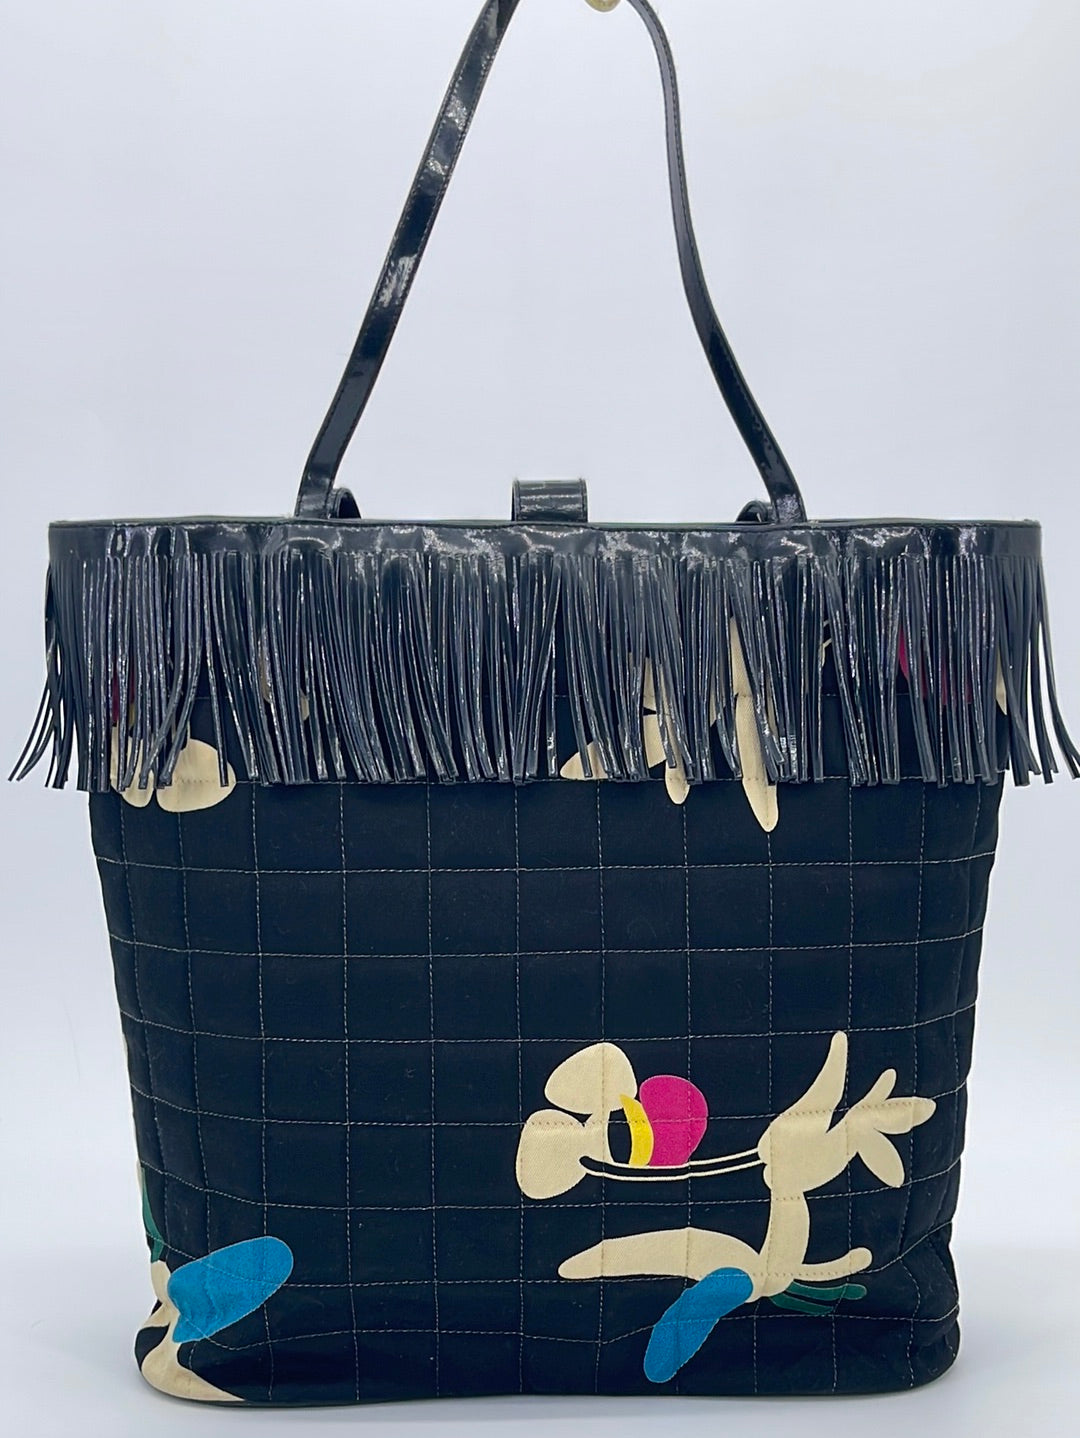 CHANEL, Bags, Chanel Vintage Tassel Flap Bag